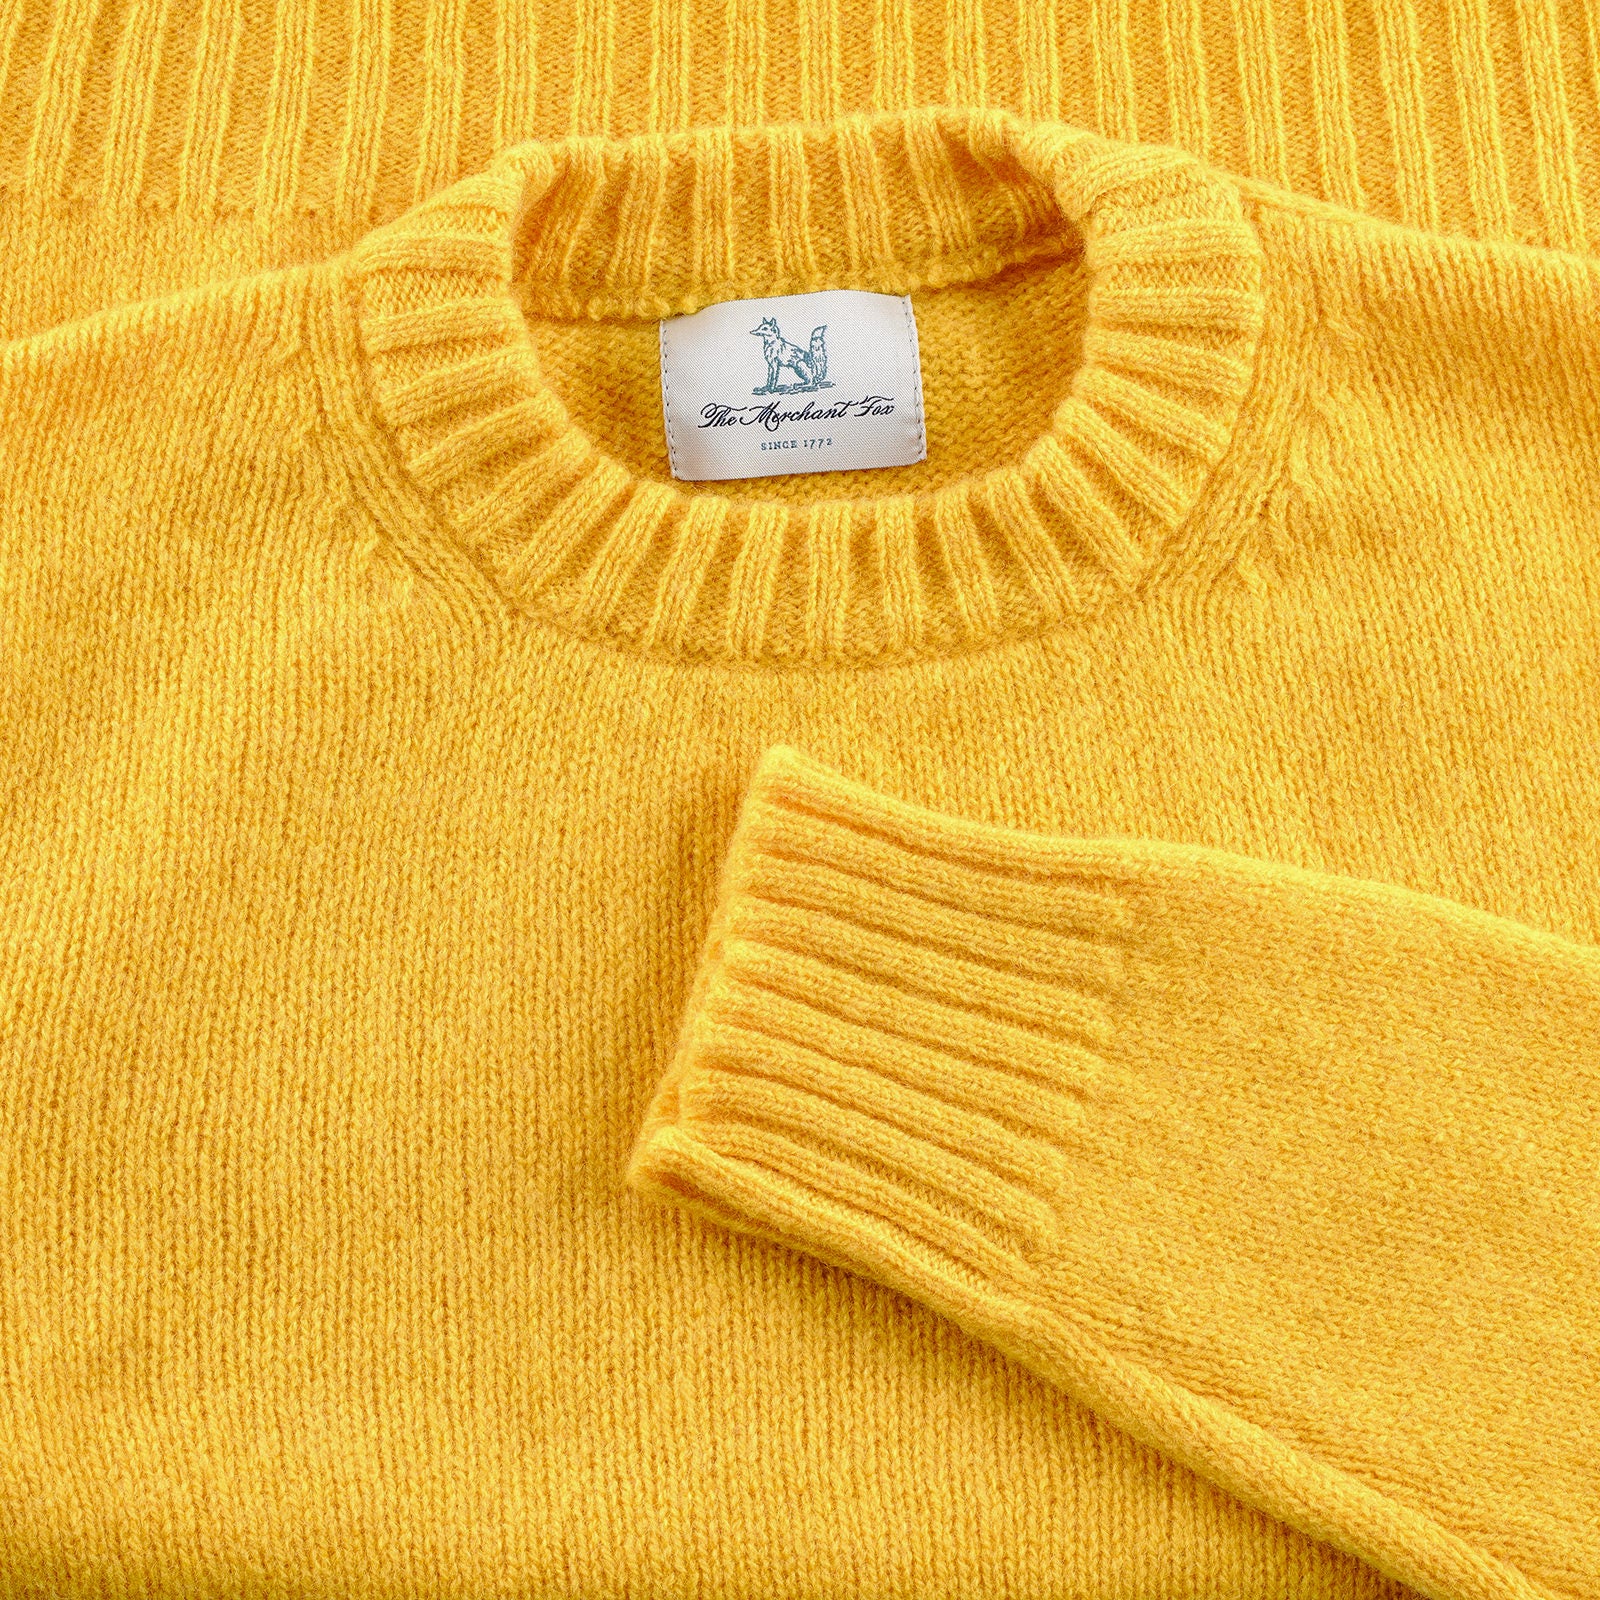 The Gorse Yellow Crew Neck Woollen Sweater